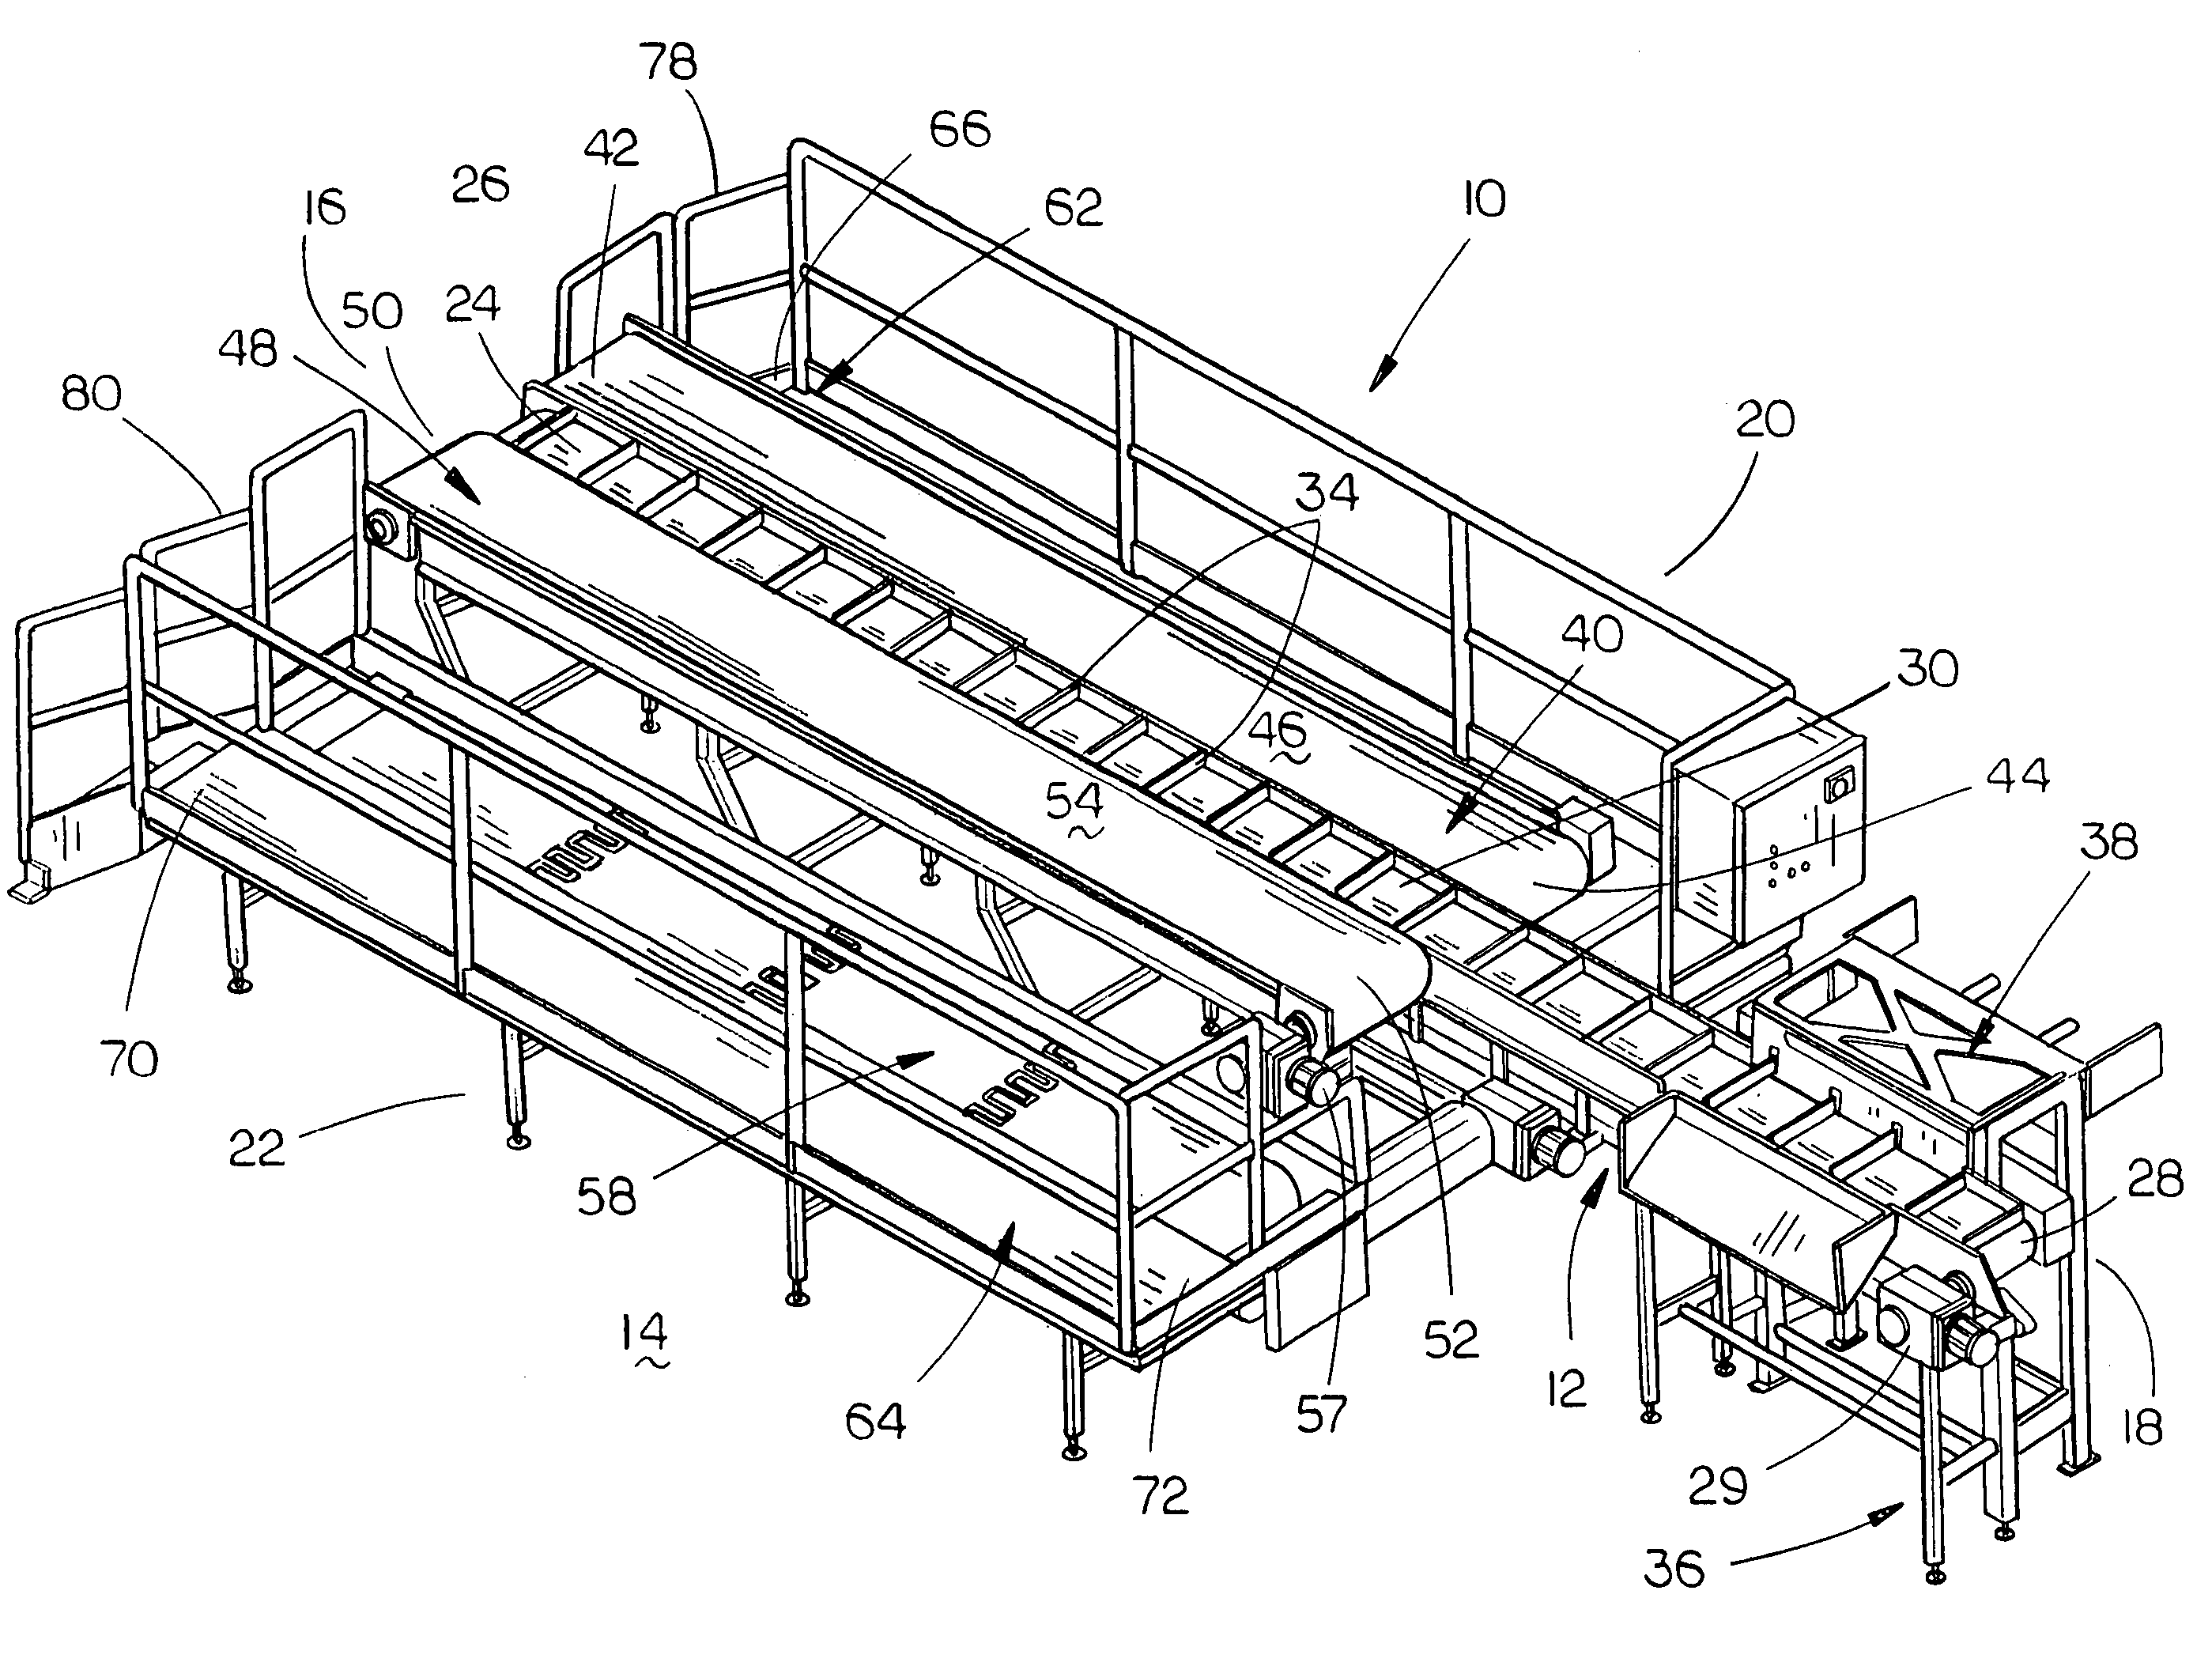 Meat processing conveyor system